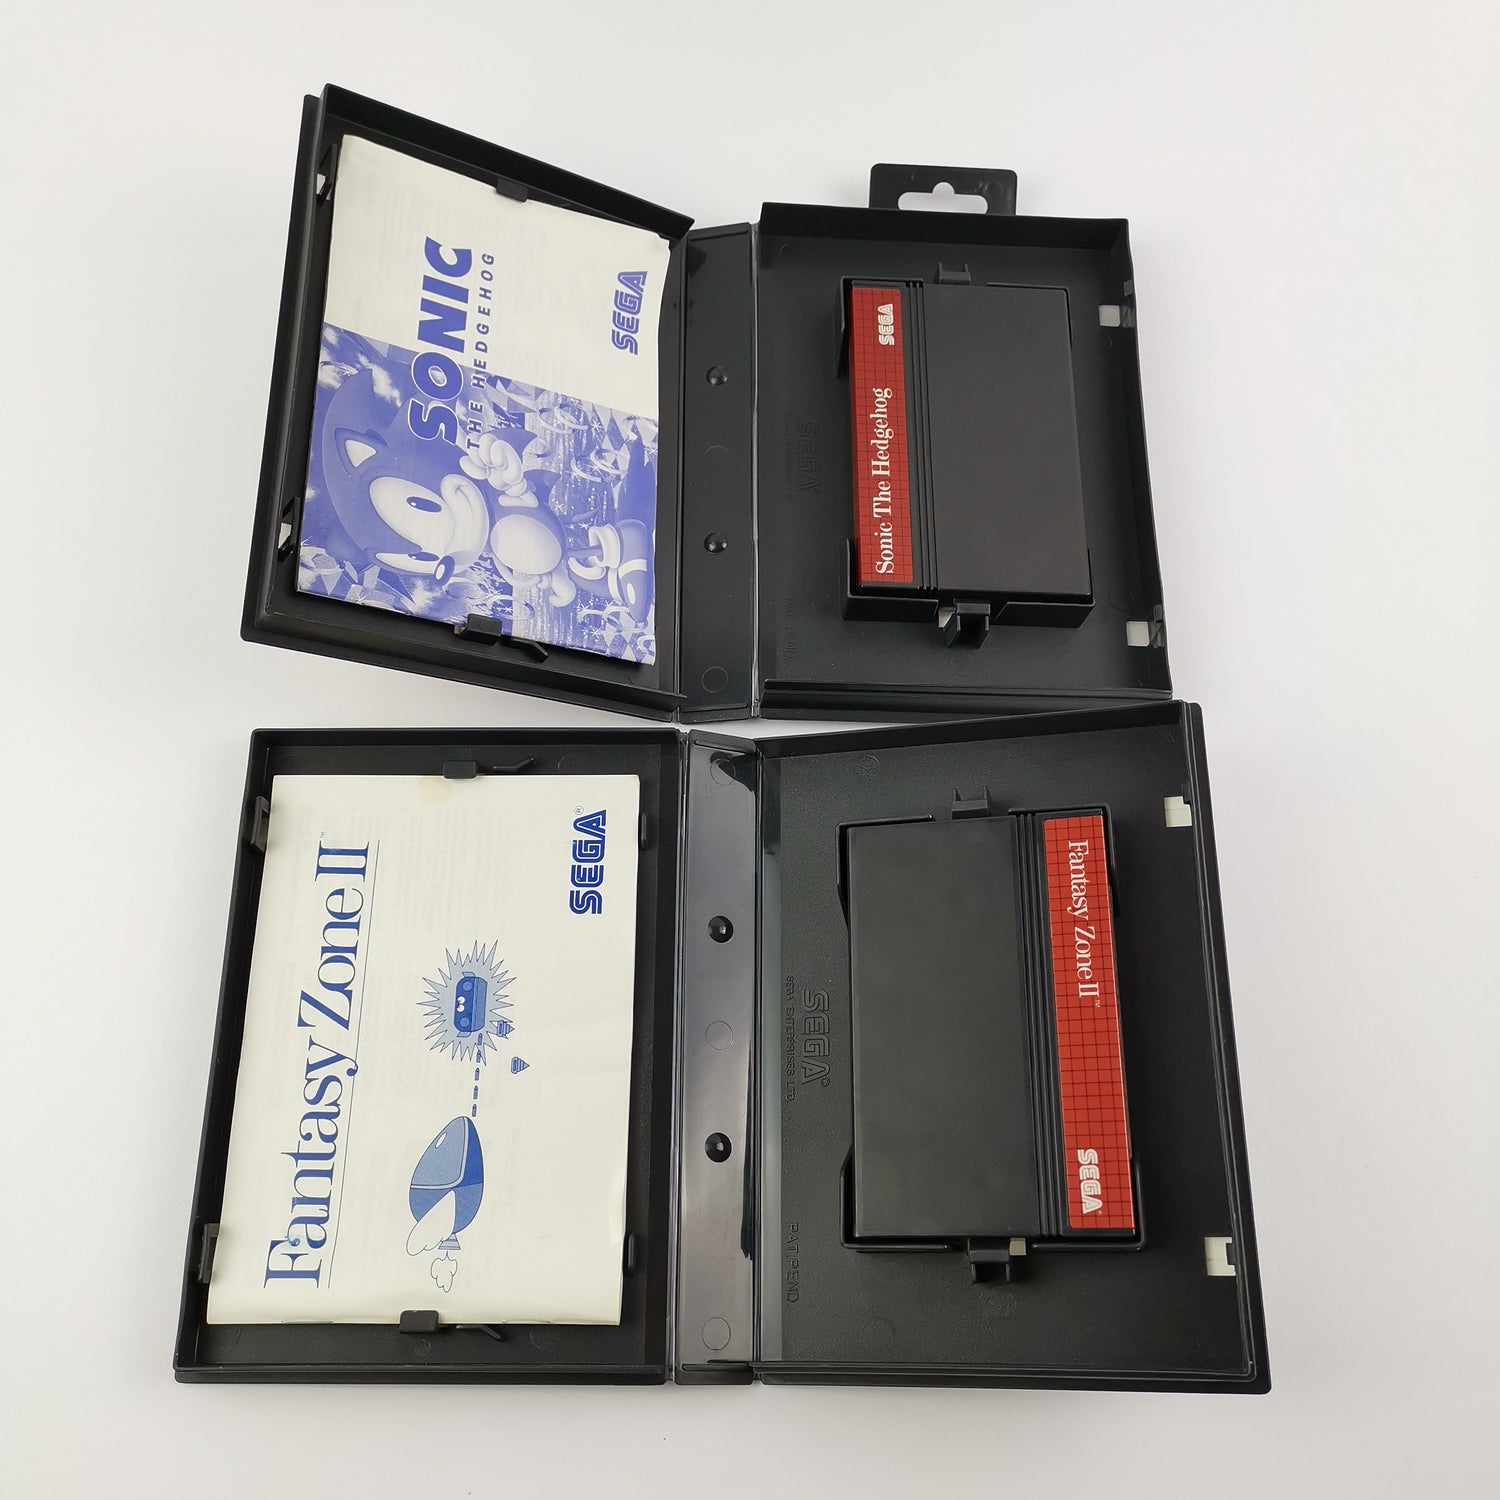 Sega Master System II Konsole mit 2 Spielen u. 2 Controller + Kabel | MS Console